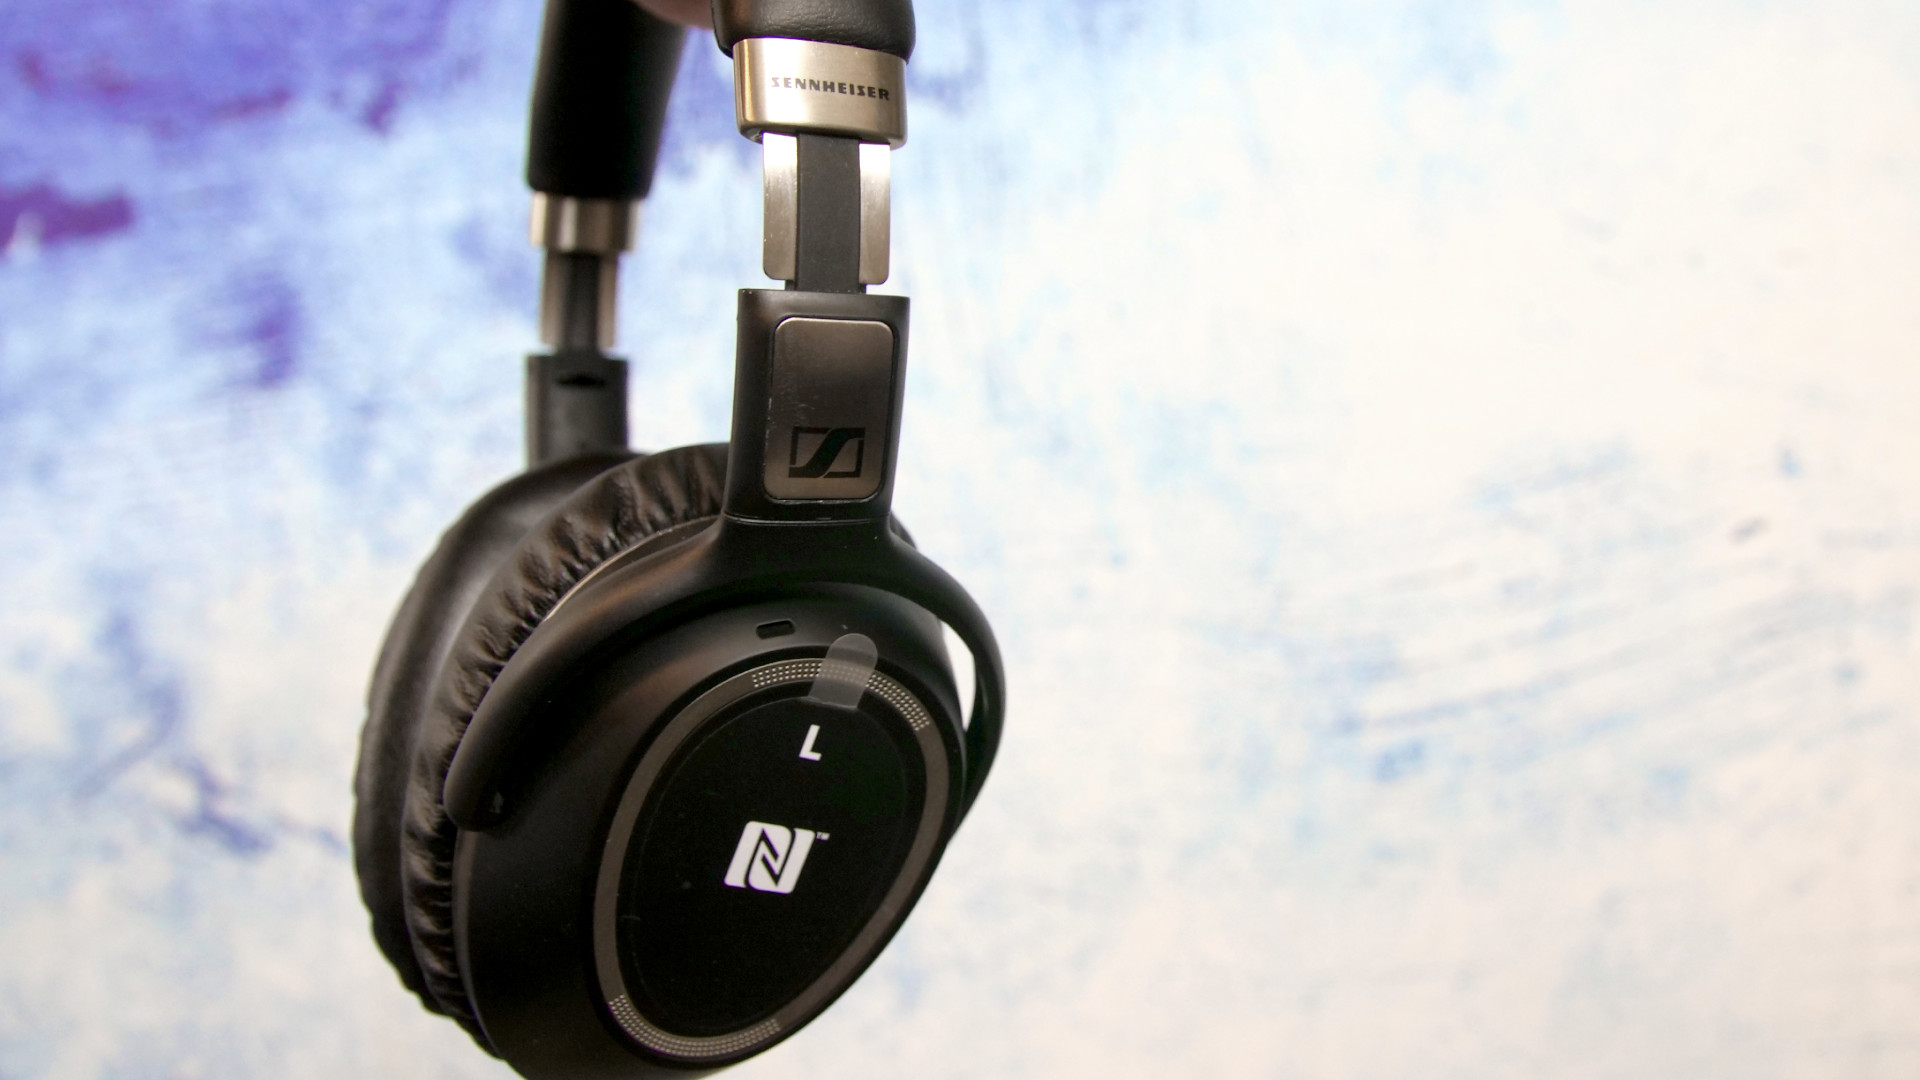 Sennheiser XC550 podcast headphones